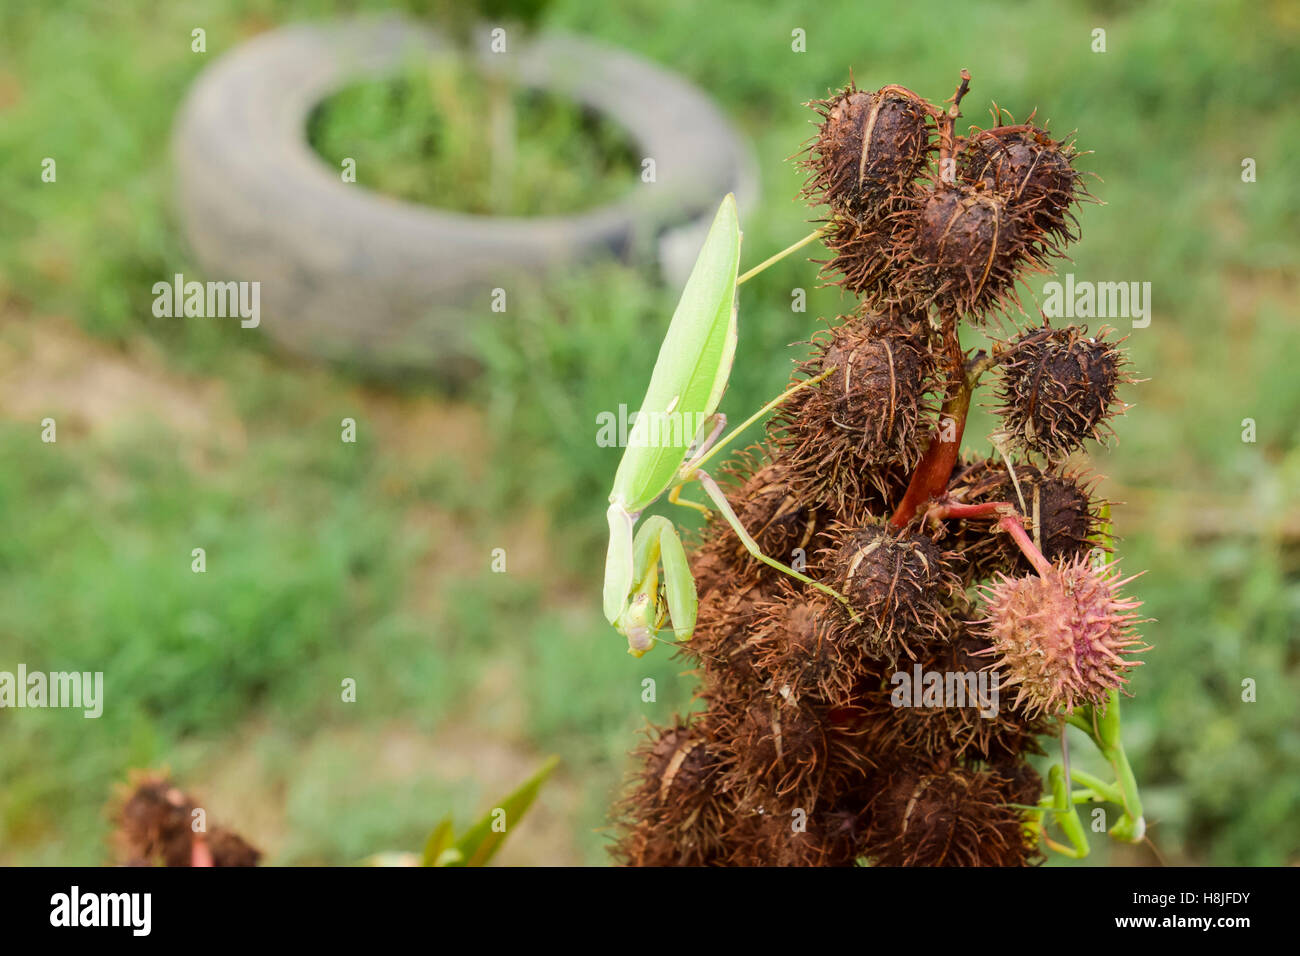 Mantis on the tong. Mating mantises. Mantis insect predator Stock Photo